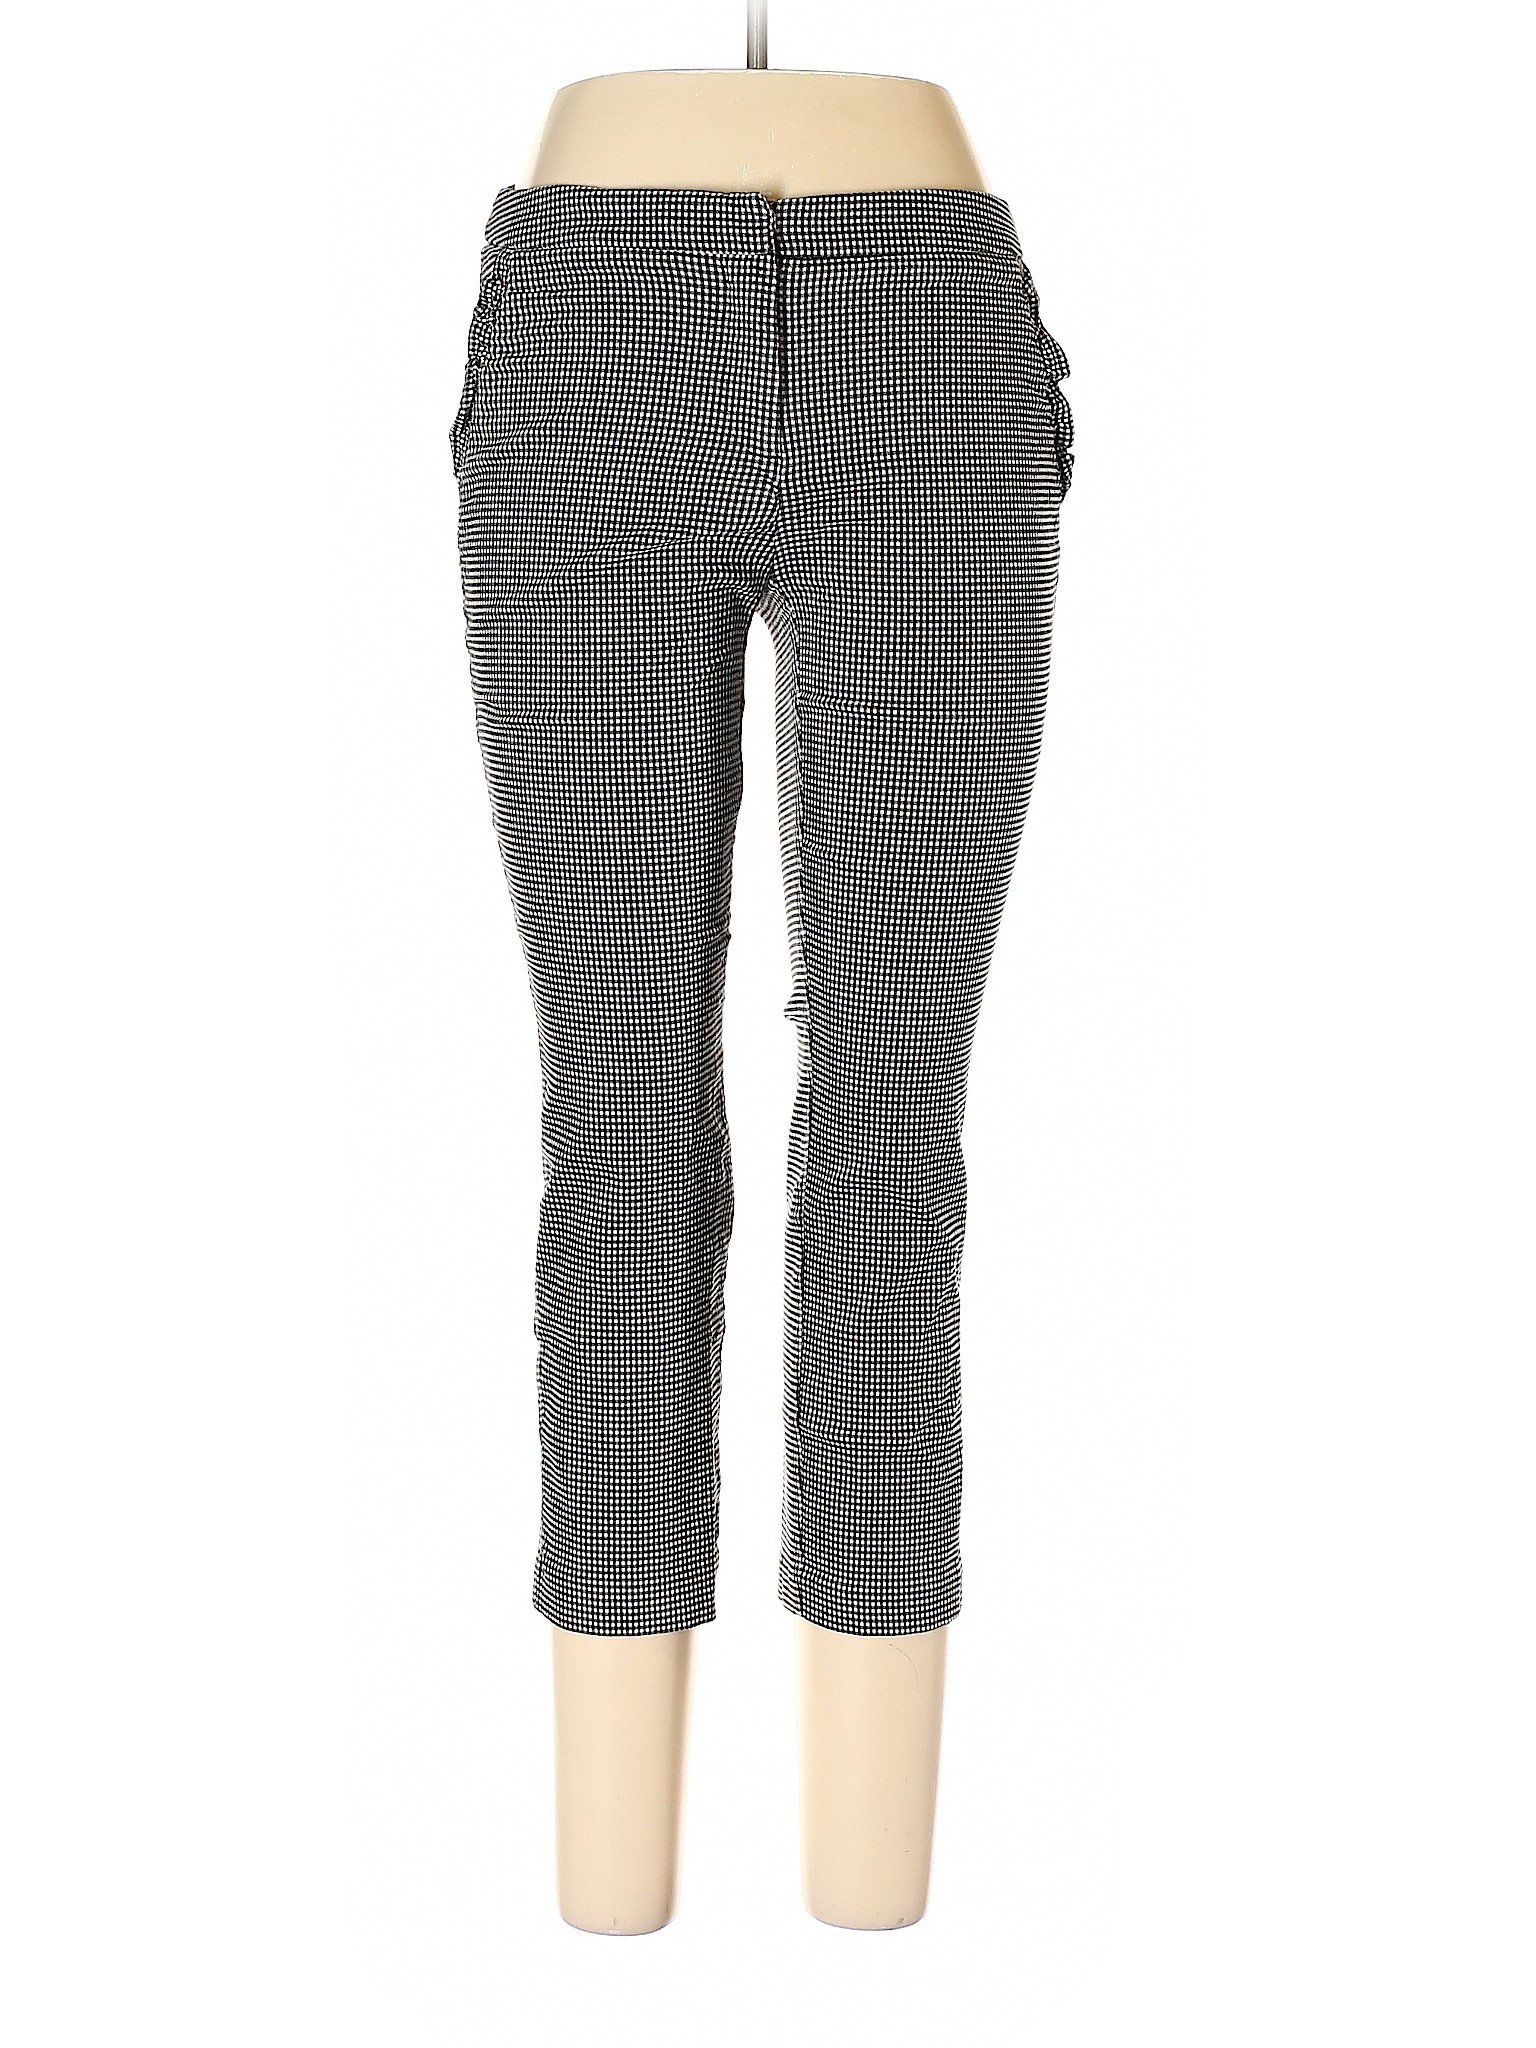 Cynthia Rowley TJX Women Gray Casual Pants 8 | eBay